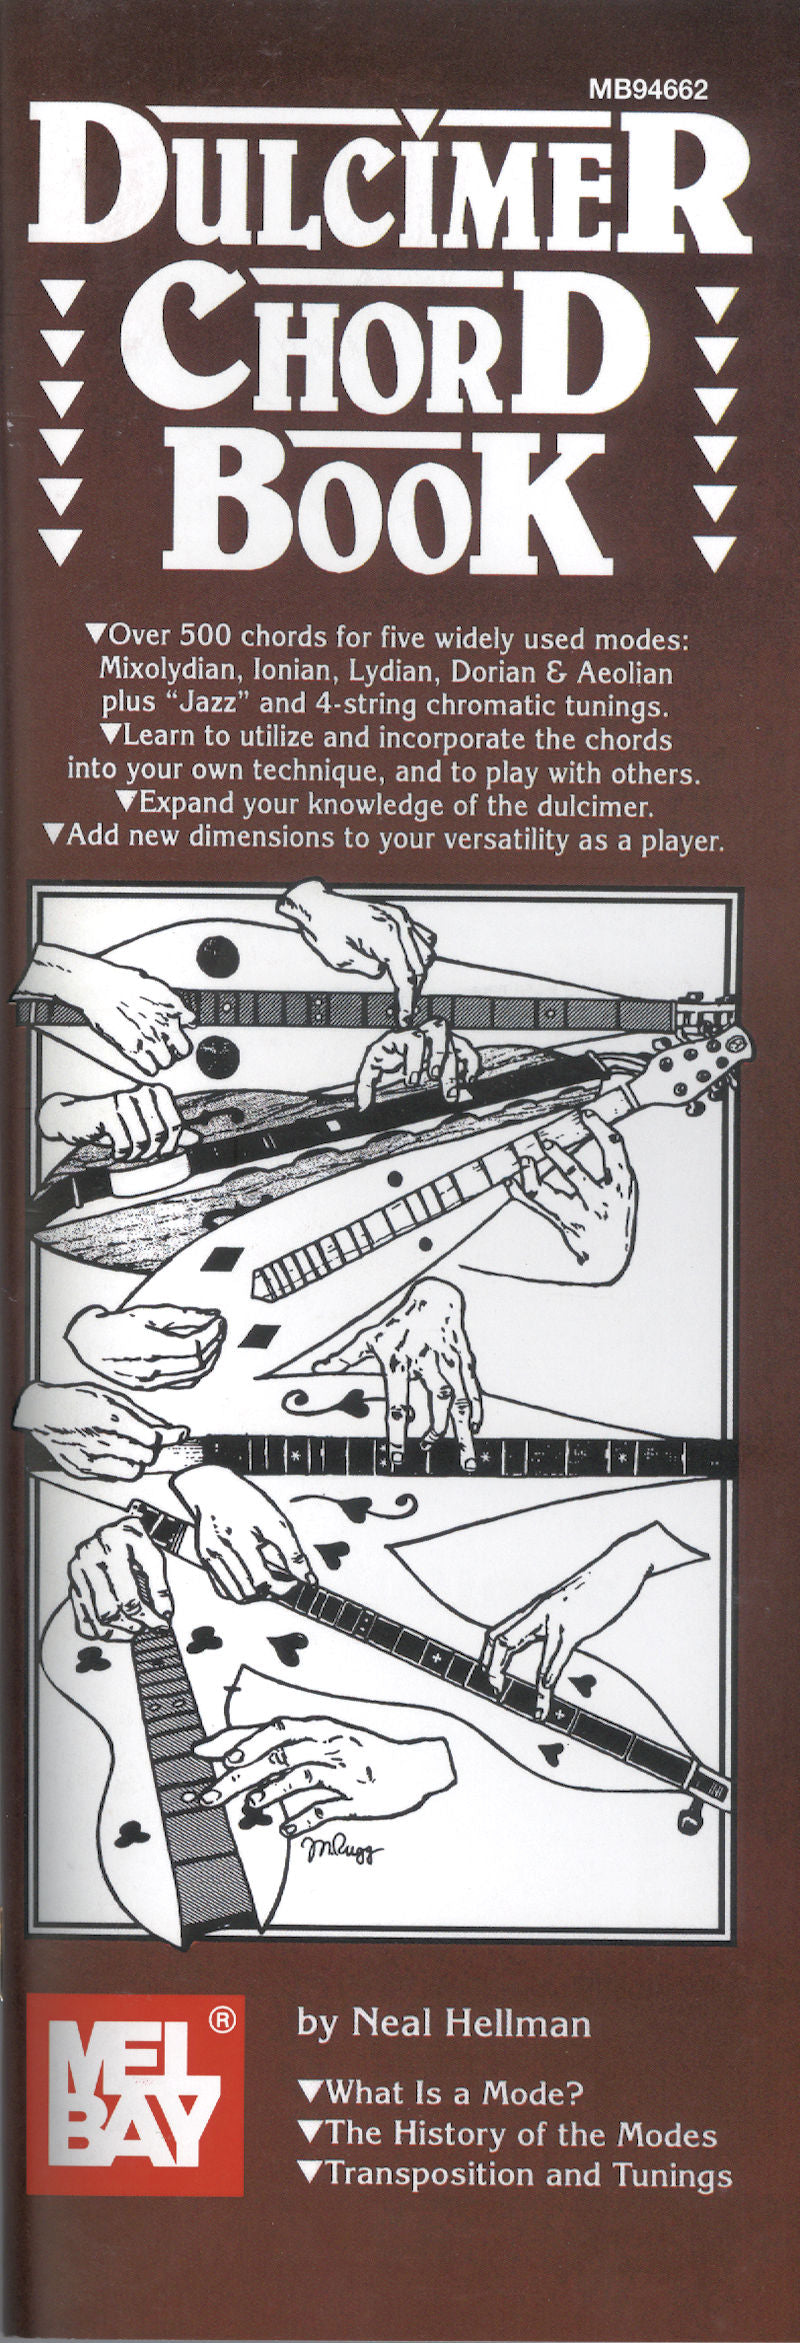 Dulcimer Chord Book - by Neal Hellman